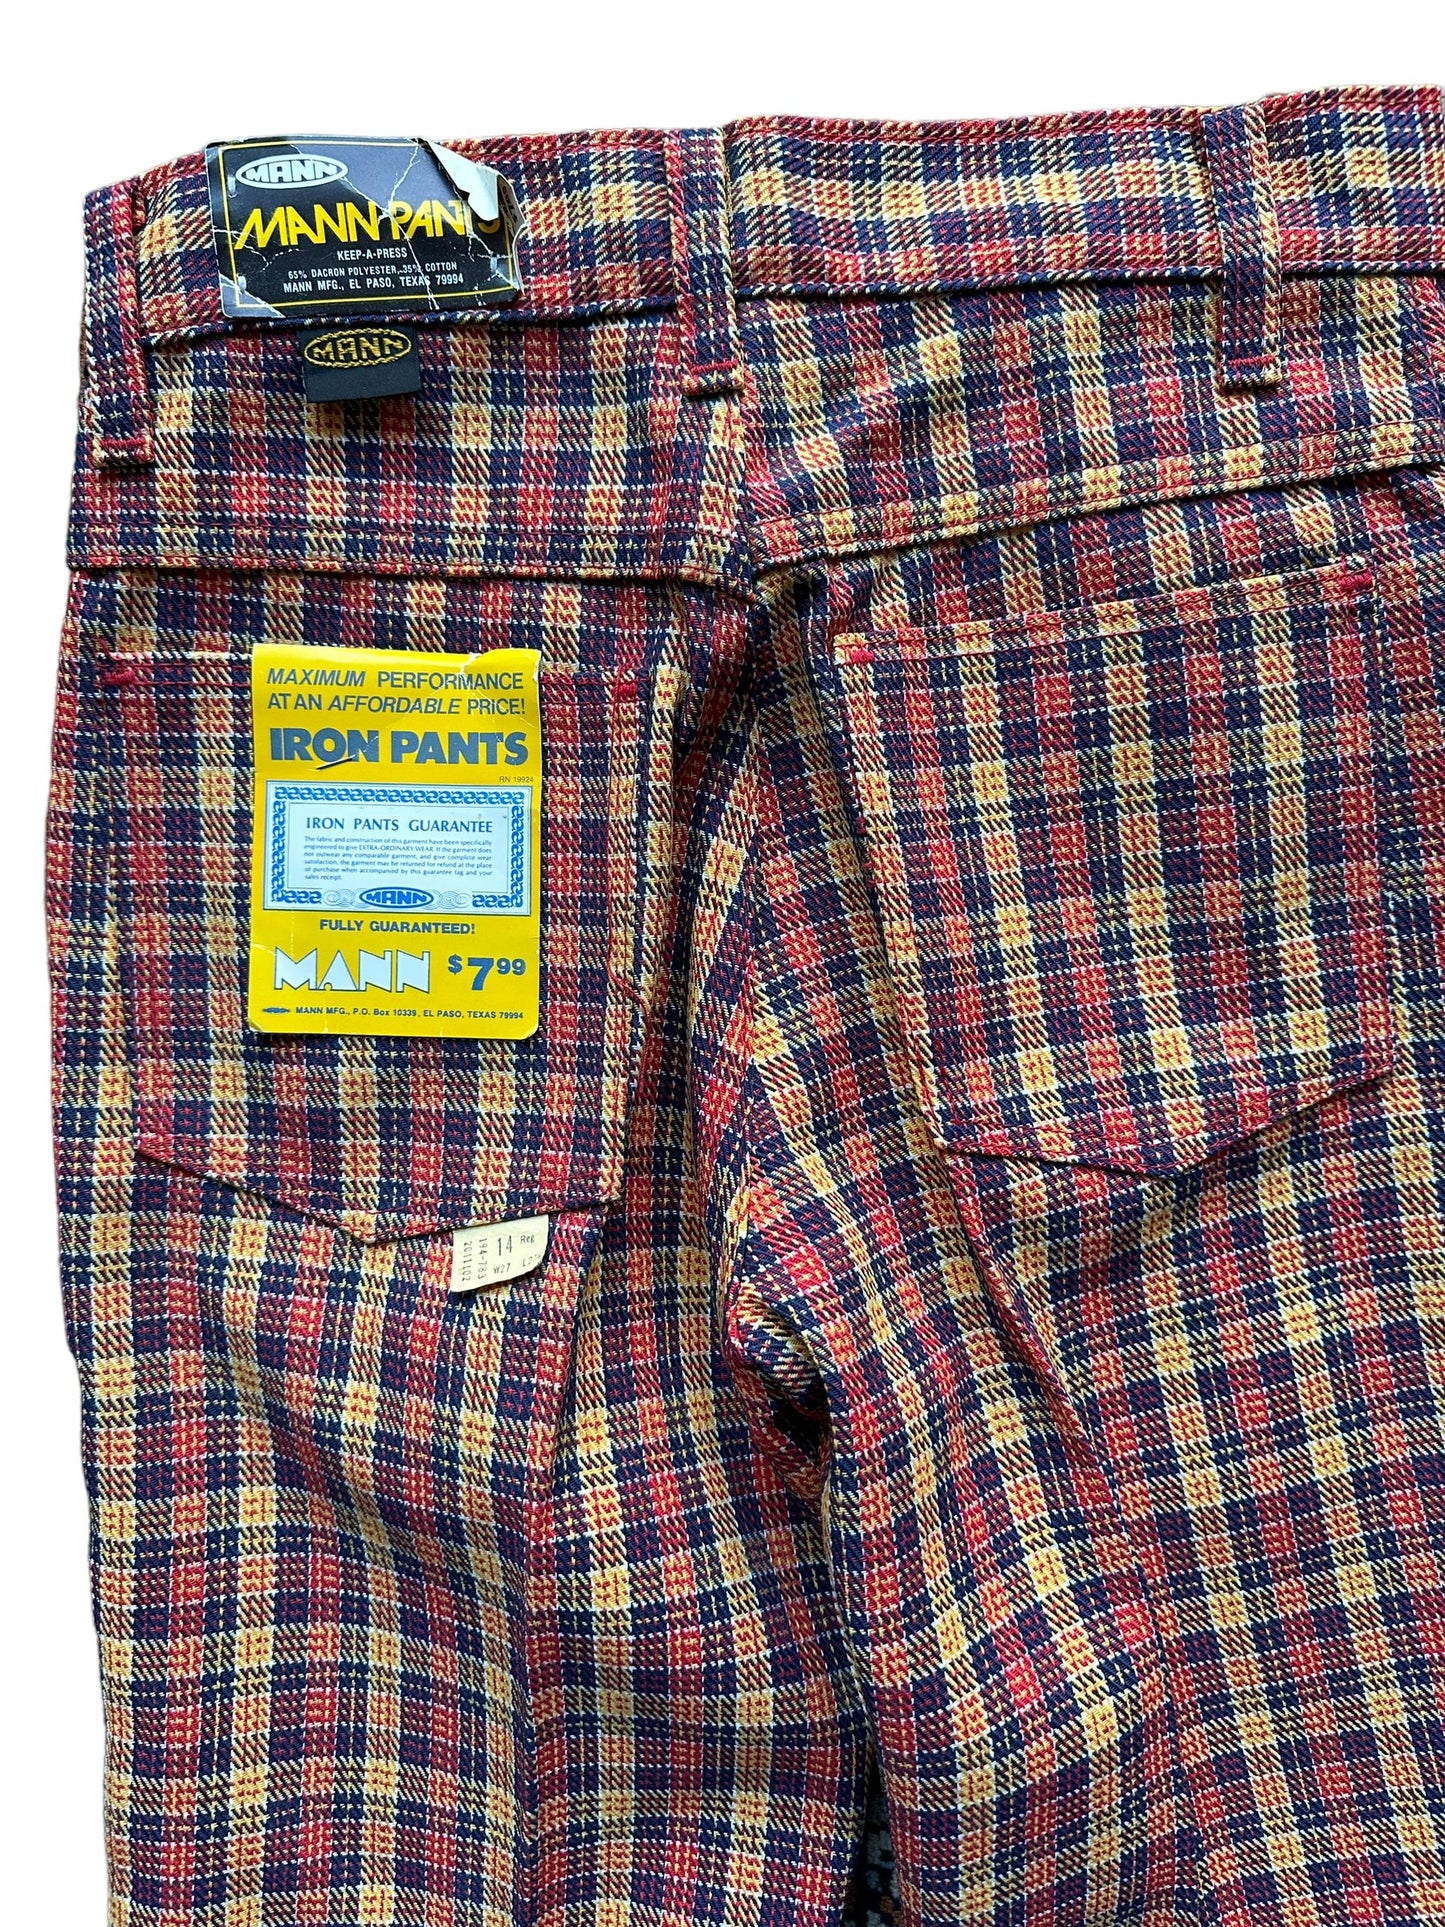 Back pocket view of Vintage Deadstock Plaid Mann Pants 26x28 | Vintage Deadstock Trousers | Barn Owl Seattle Vintage